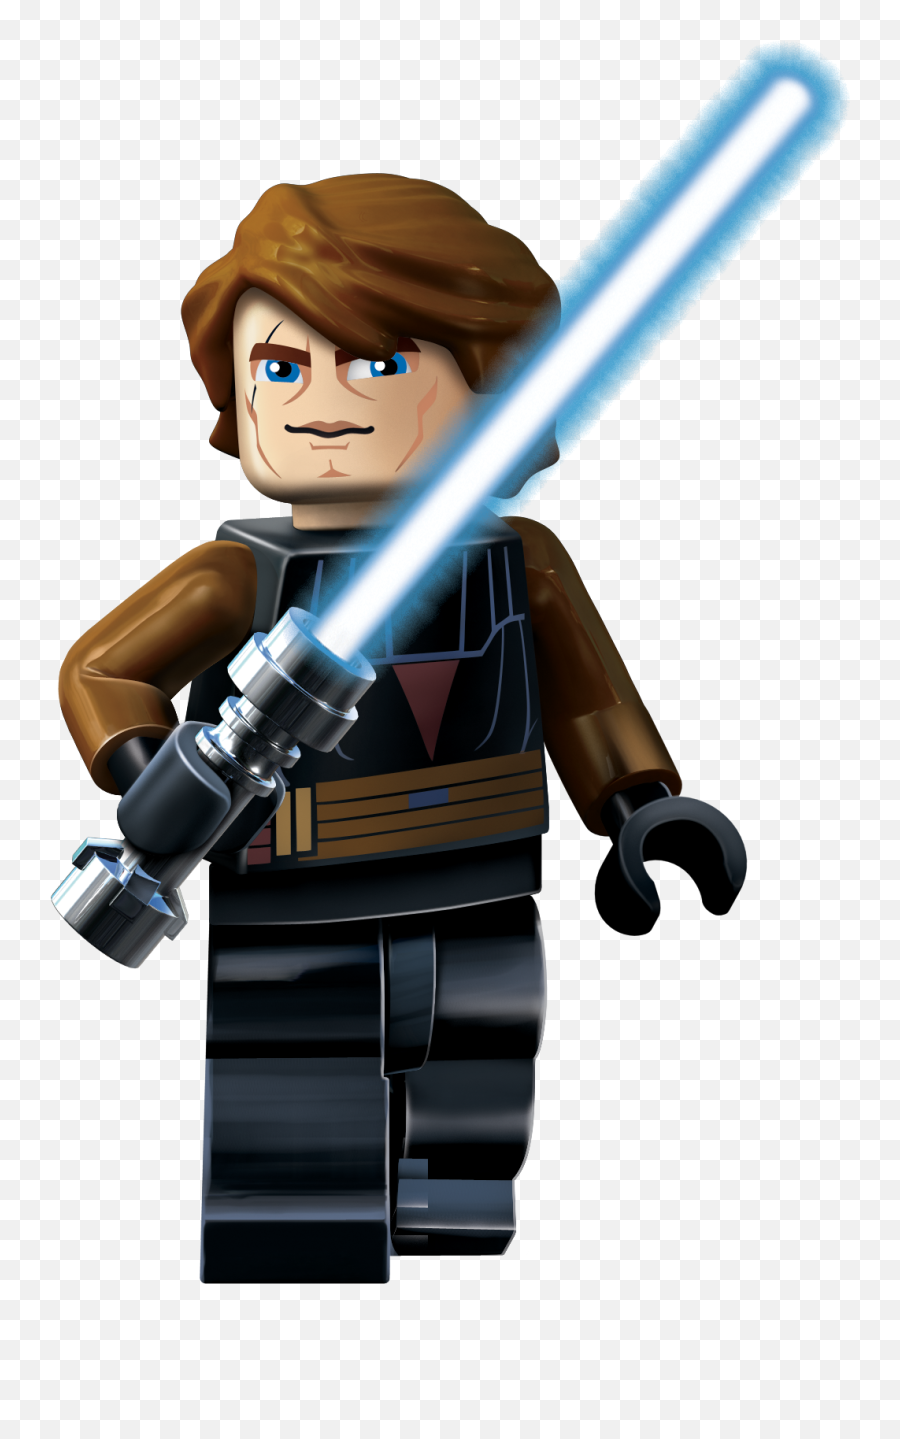 Anakin Skywalker Lego Star Wars Wiki - Lego Star Wars 3 Anakin Emoji,Skull Trooper Emoji